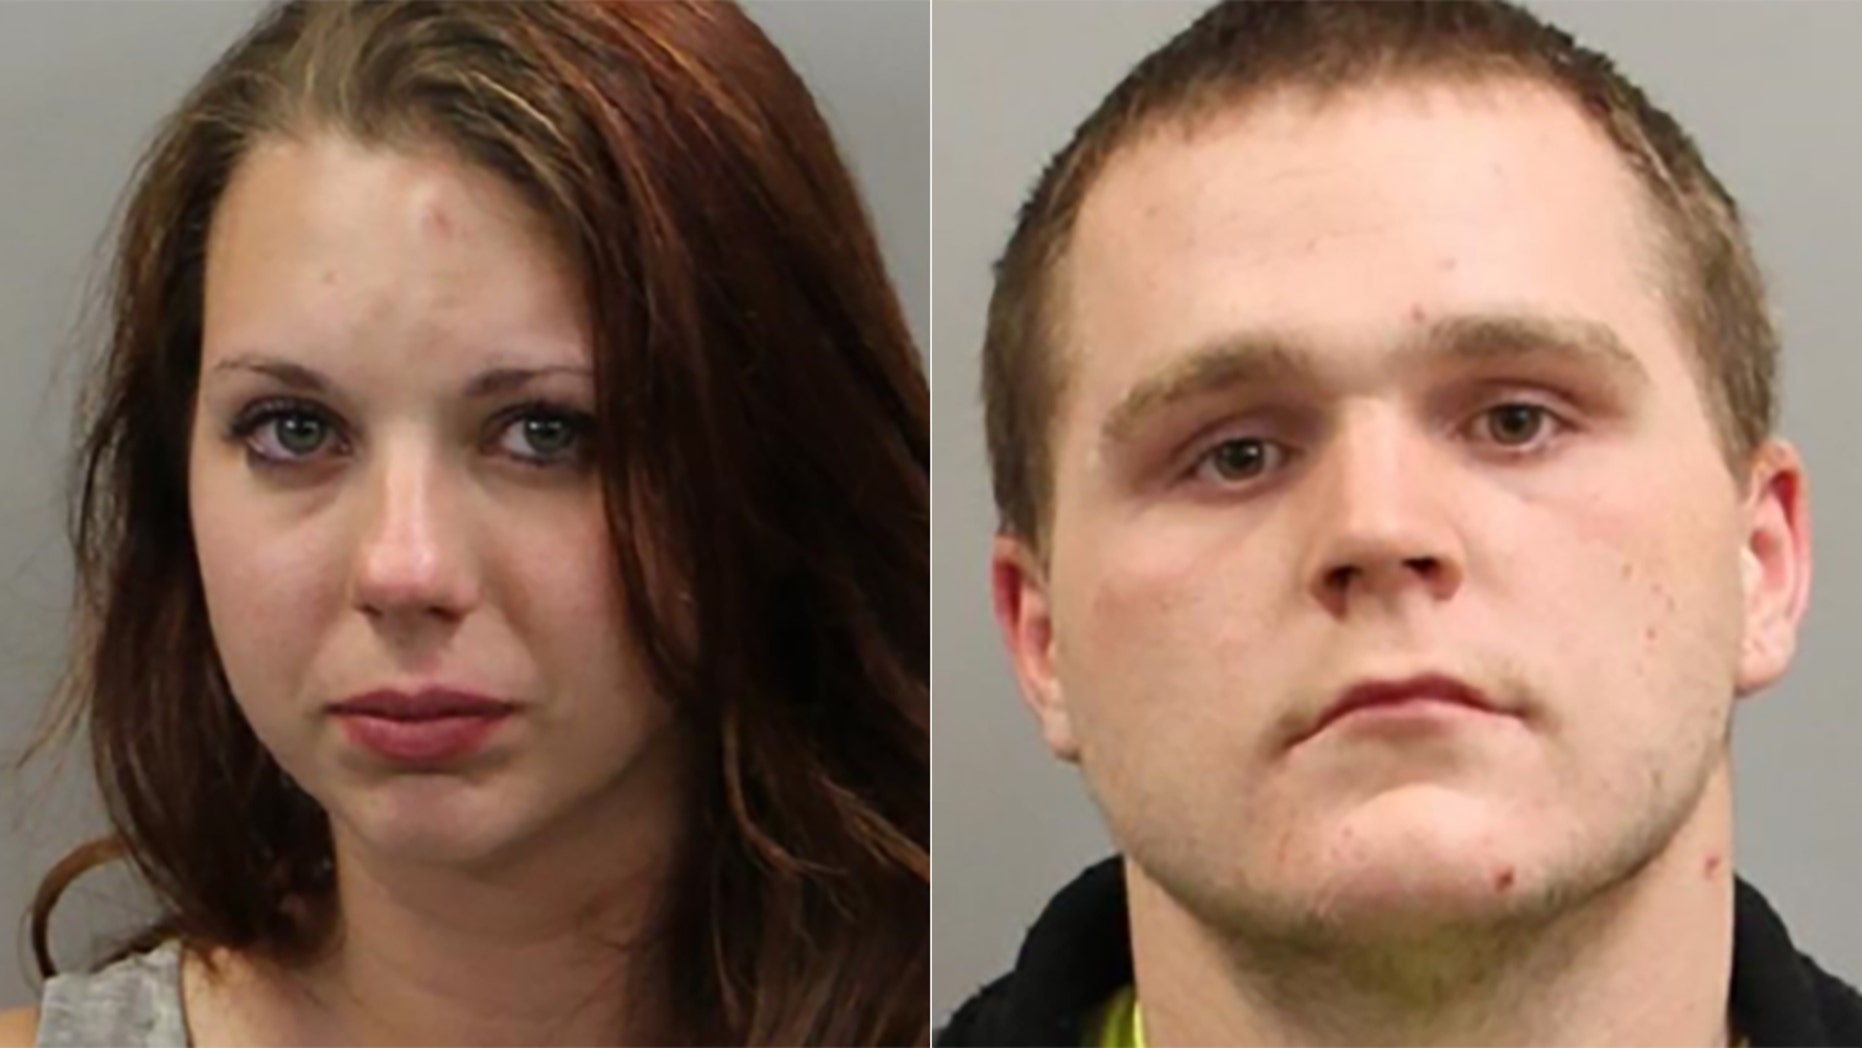 Gracelynn Bradeberry and Bryce Mason were arrested.